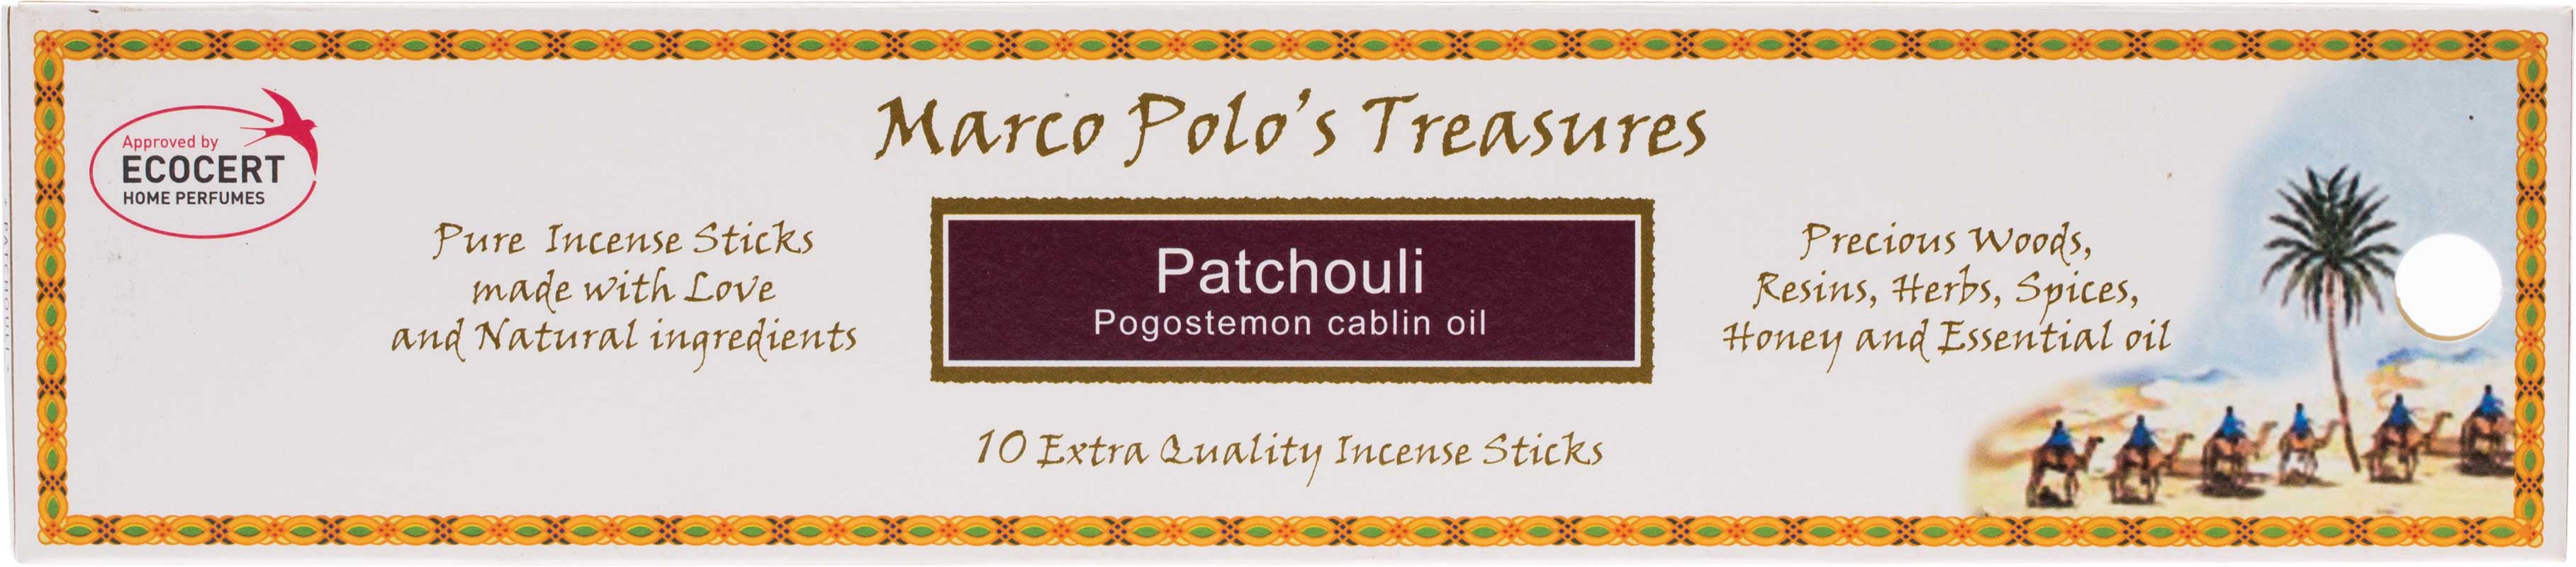 MARCO POLO'S TREASURES Incense Sticks Patchouli